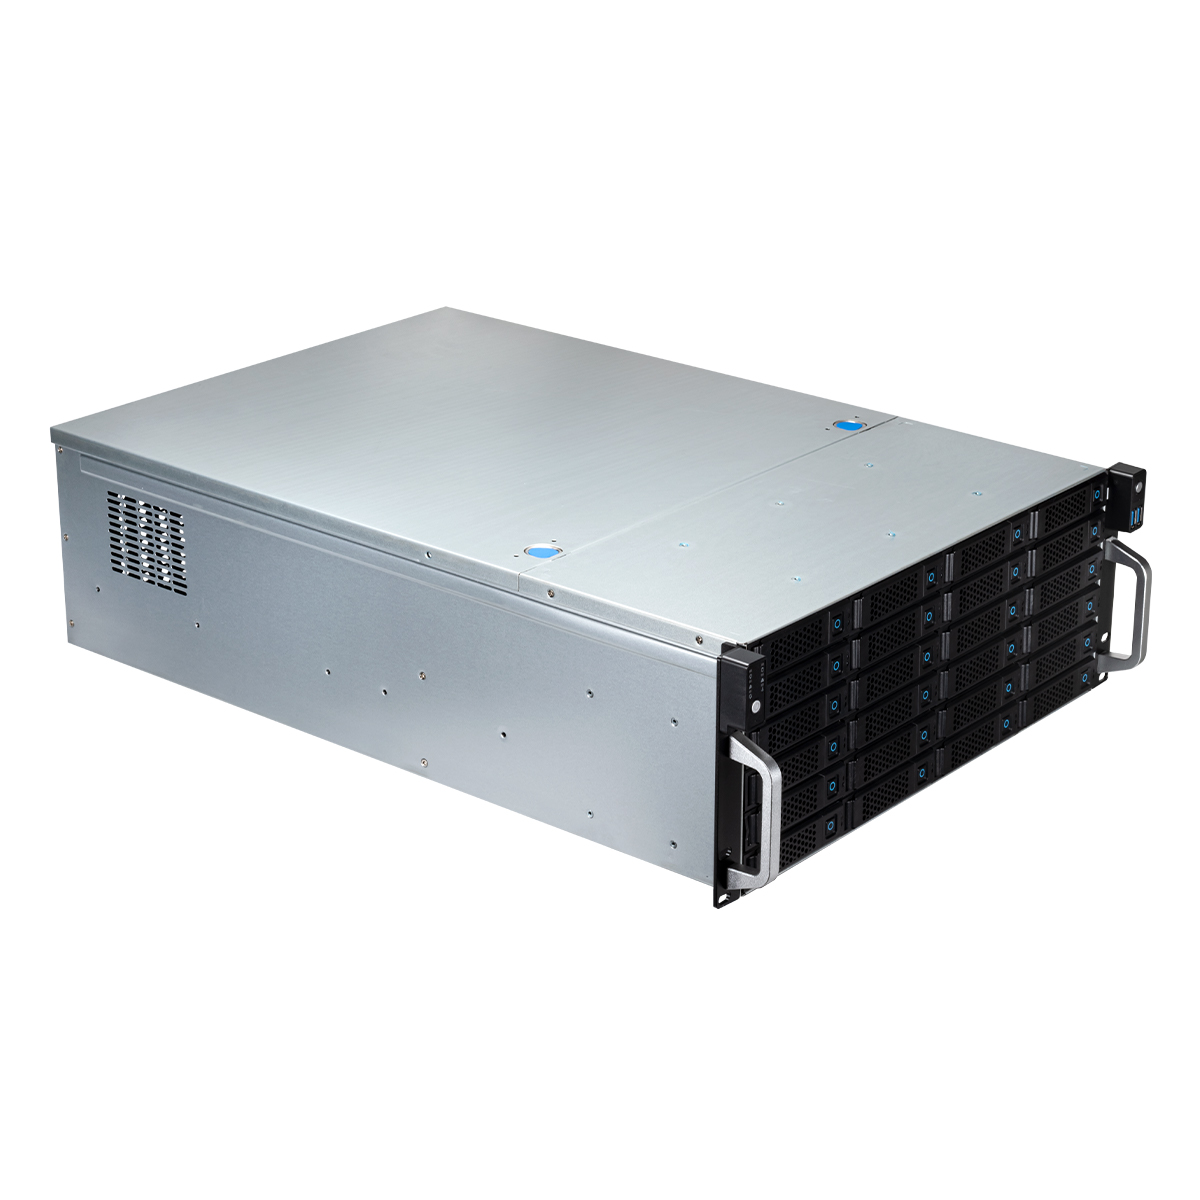 Unykach Server 4U Rack 24 Bays Hot Swap - Tailles de disque prises en charge 2,5", 3,5" - Cartes mères compatibles EEB, CEB, ATX, MicroATX - USB-A 2.0 - 3 ventilateurs 120 mm inclus